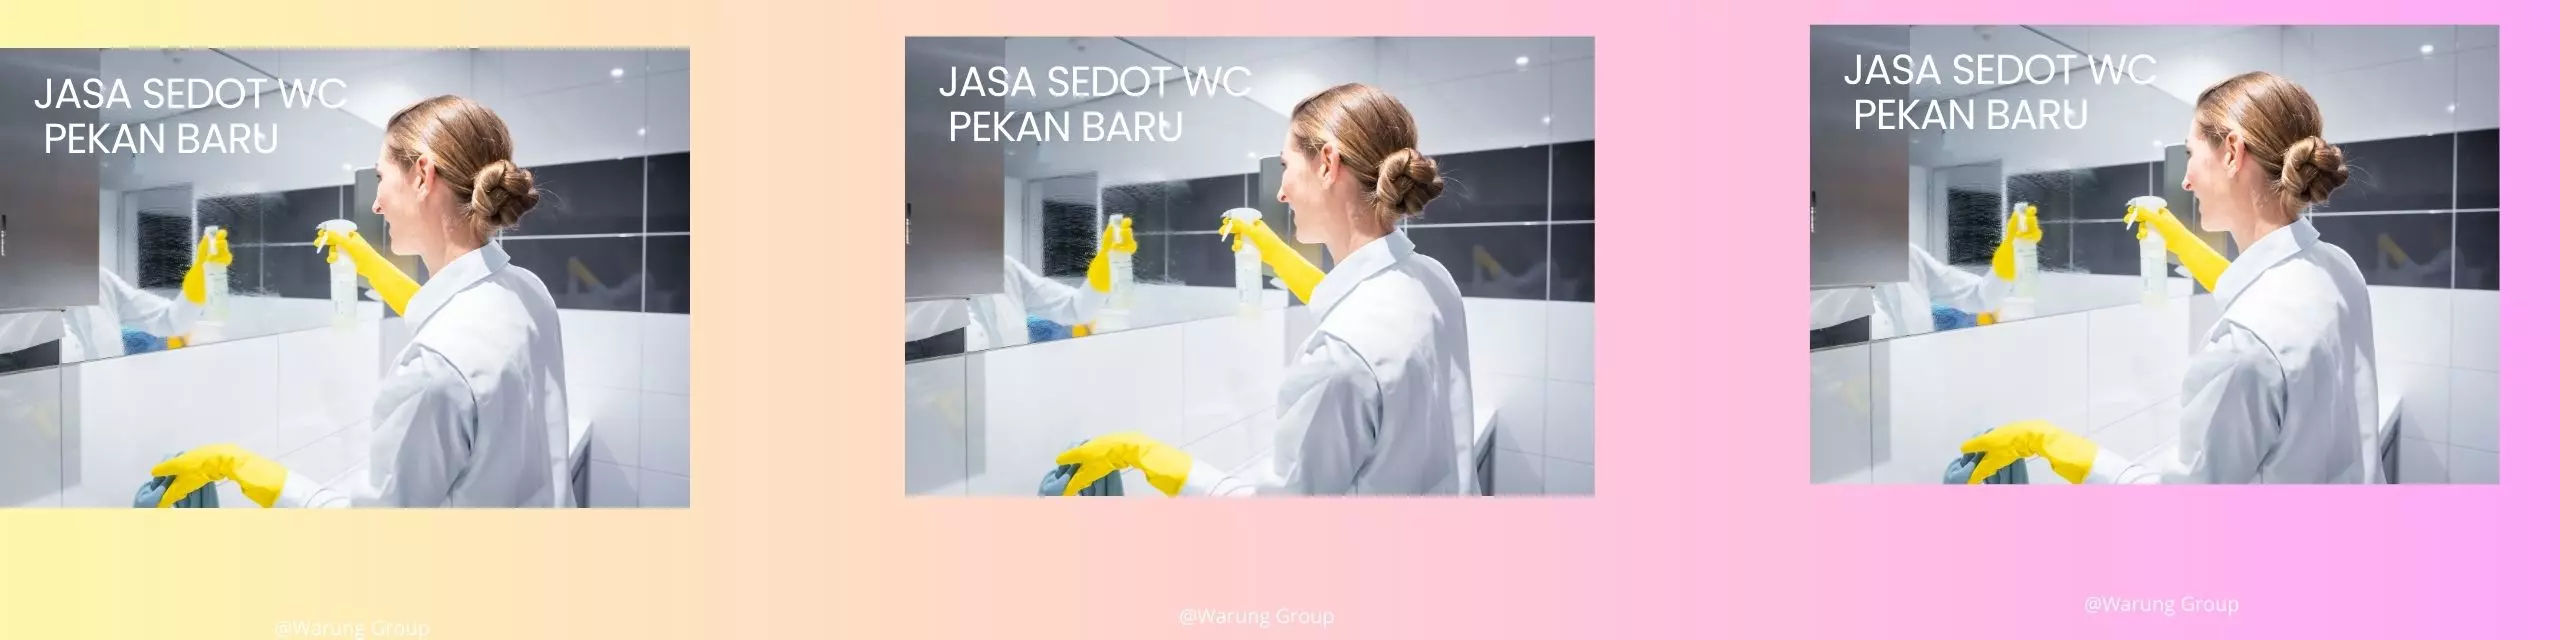 Jasa Sedot WC Pekanbaru